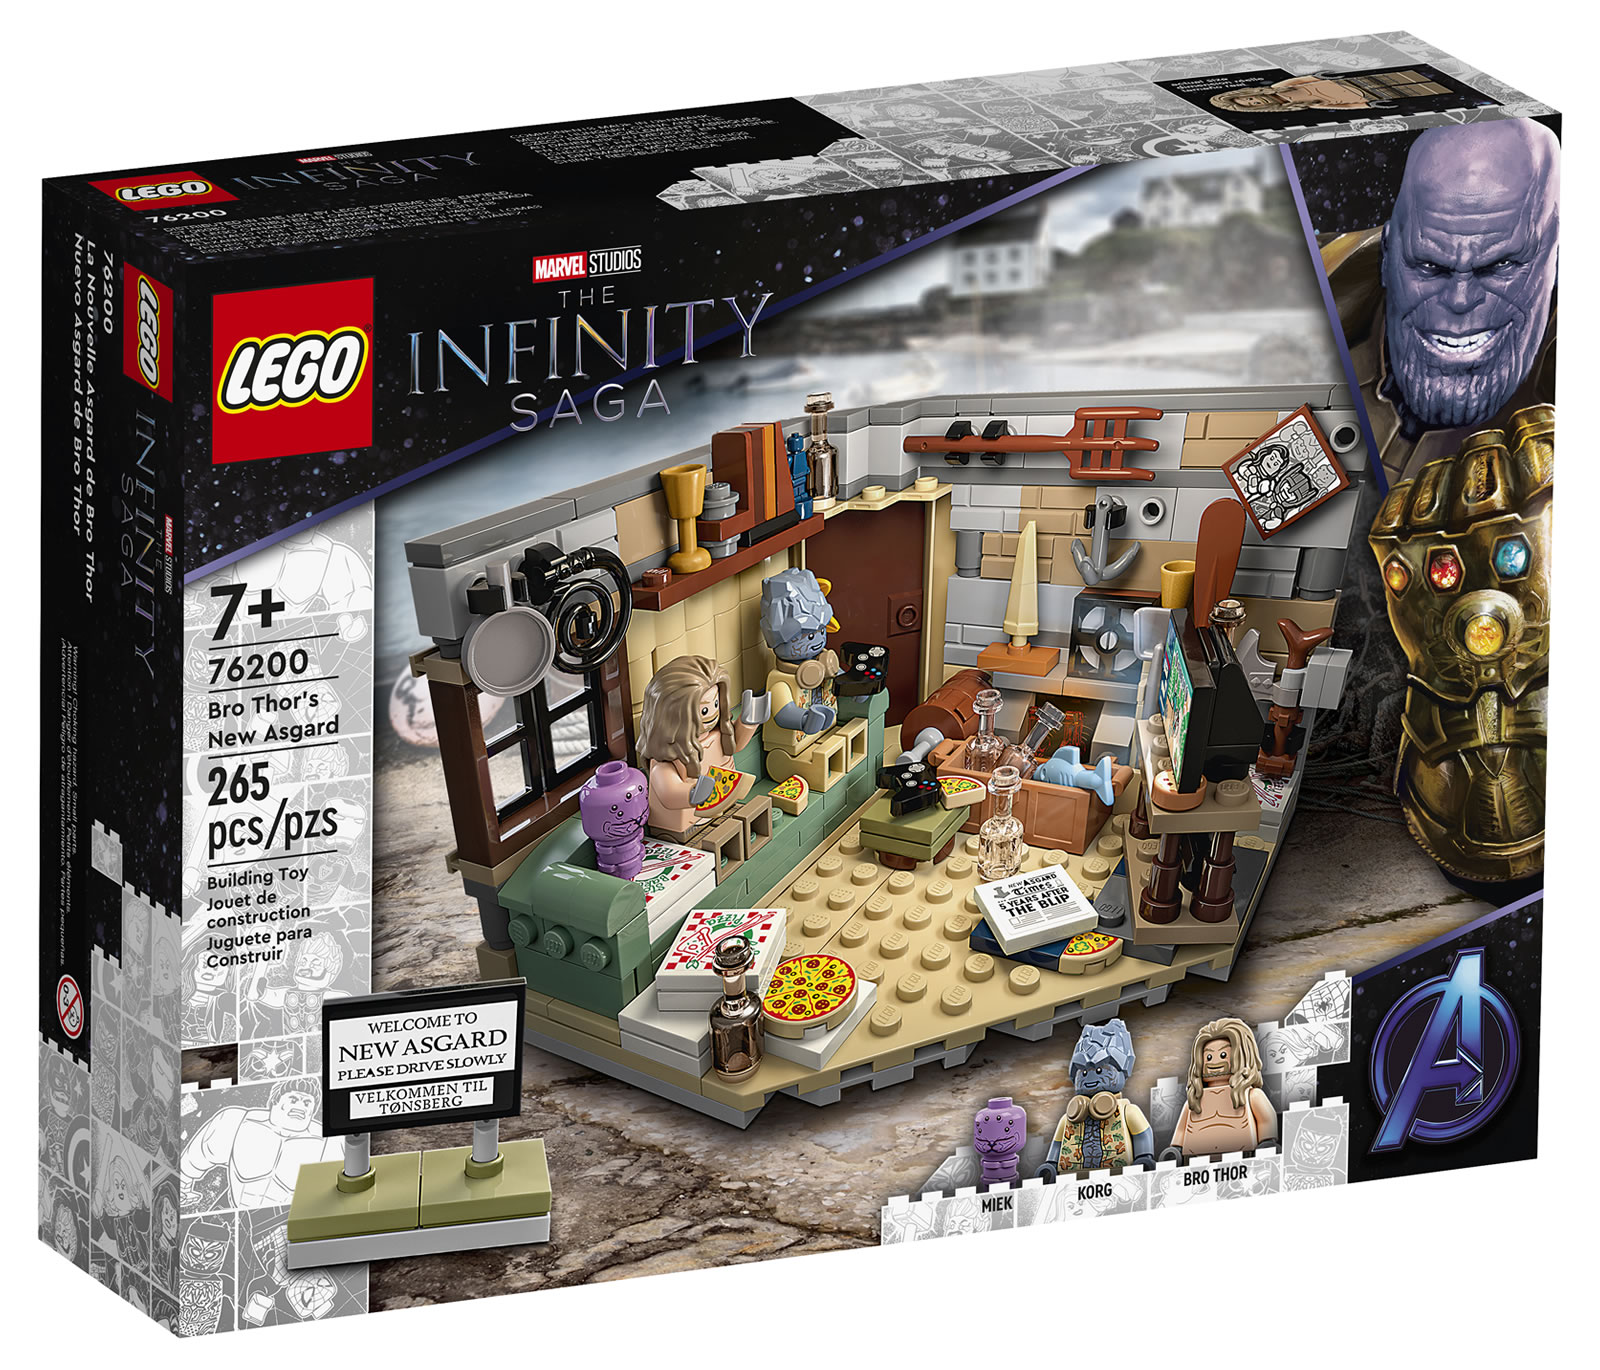 LEGO Marvel Infinity Saga Bro Thor's New Asgard (76200) Revealed - Fan